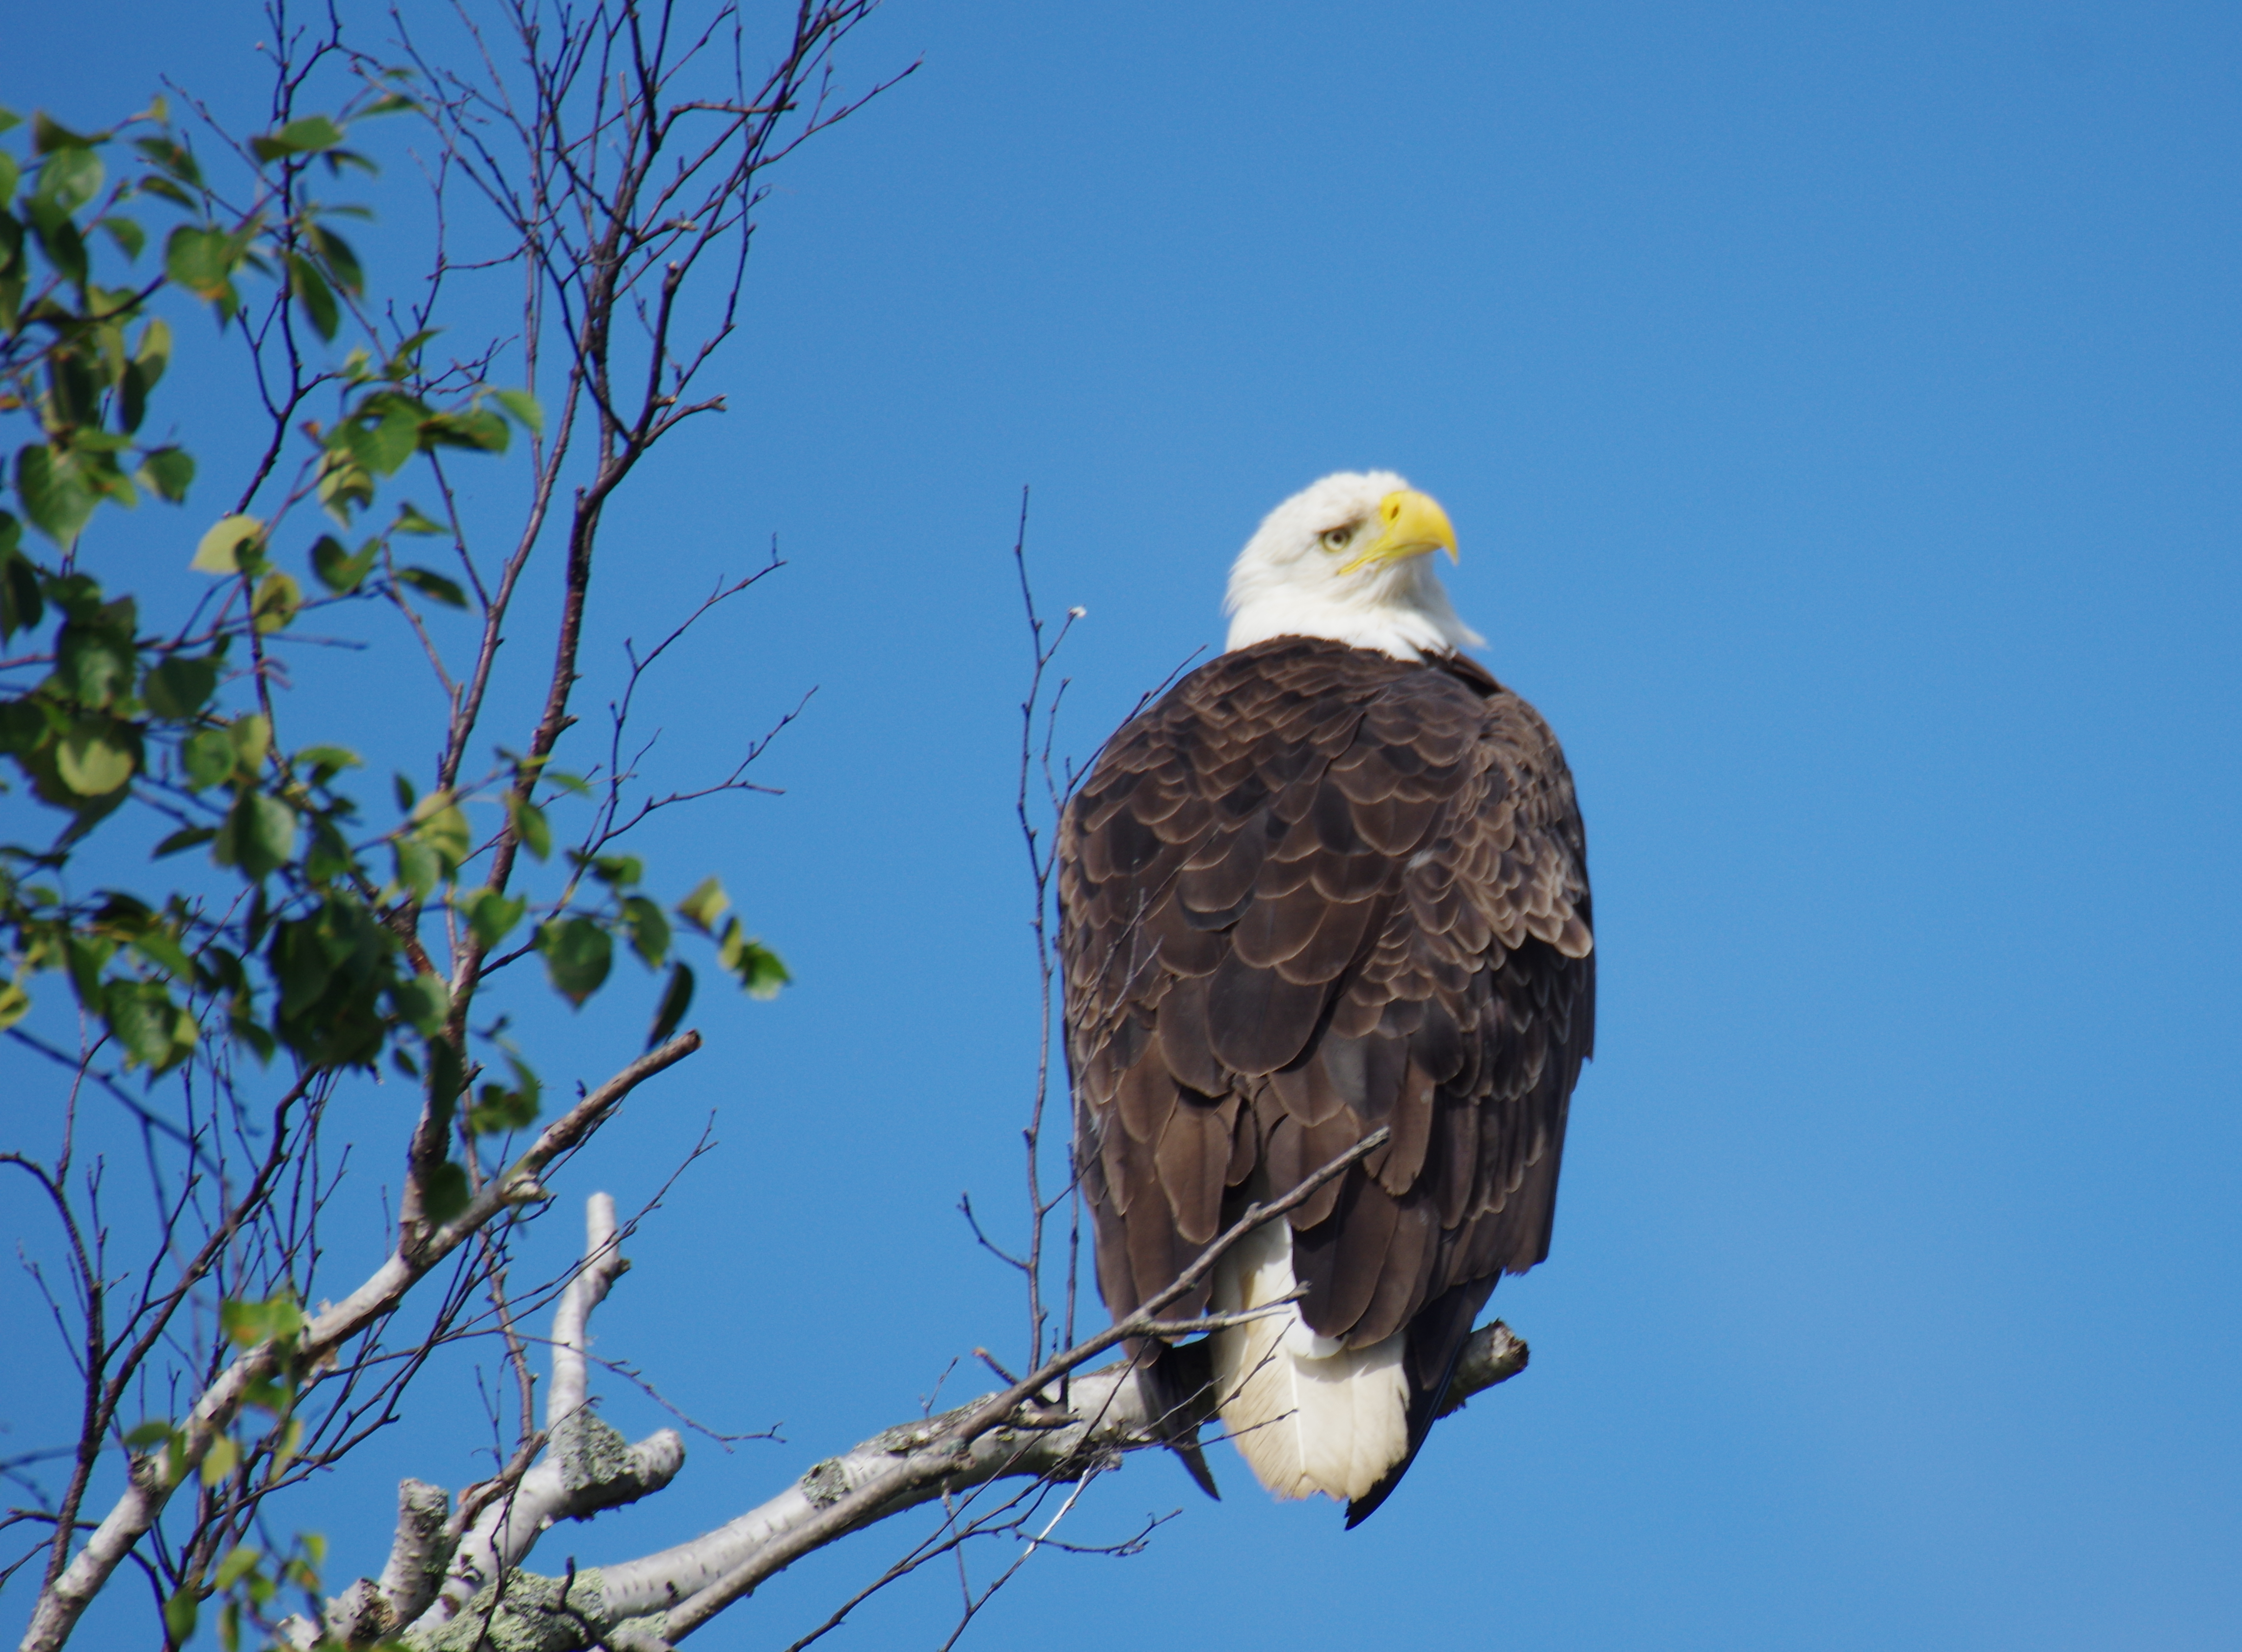 Bald eagle in Ontario, Canada